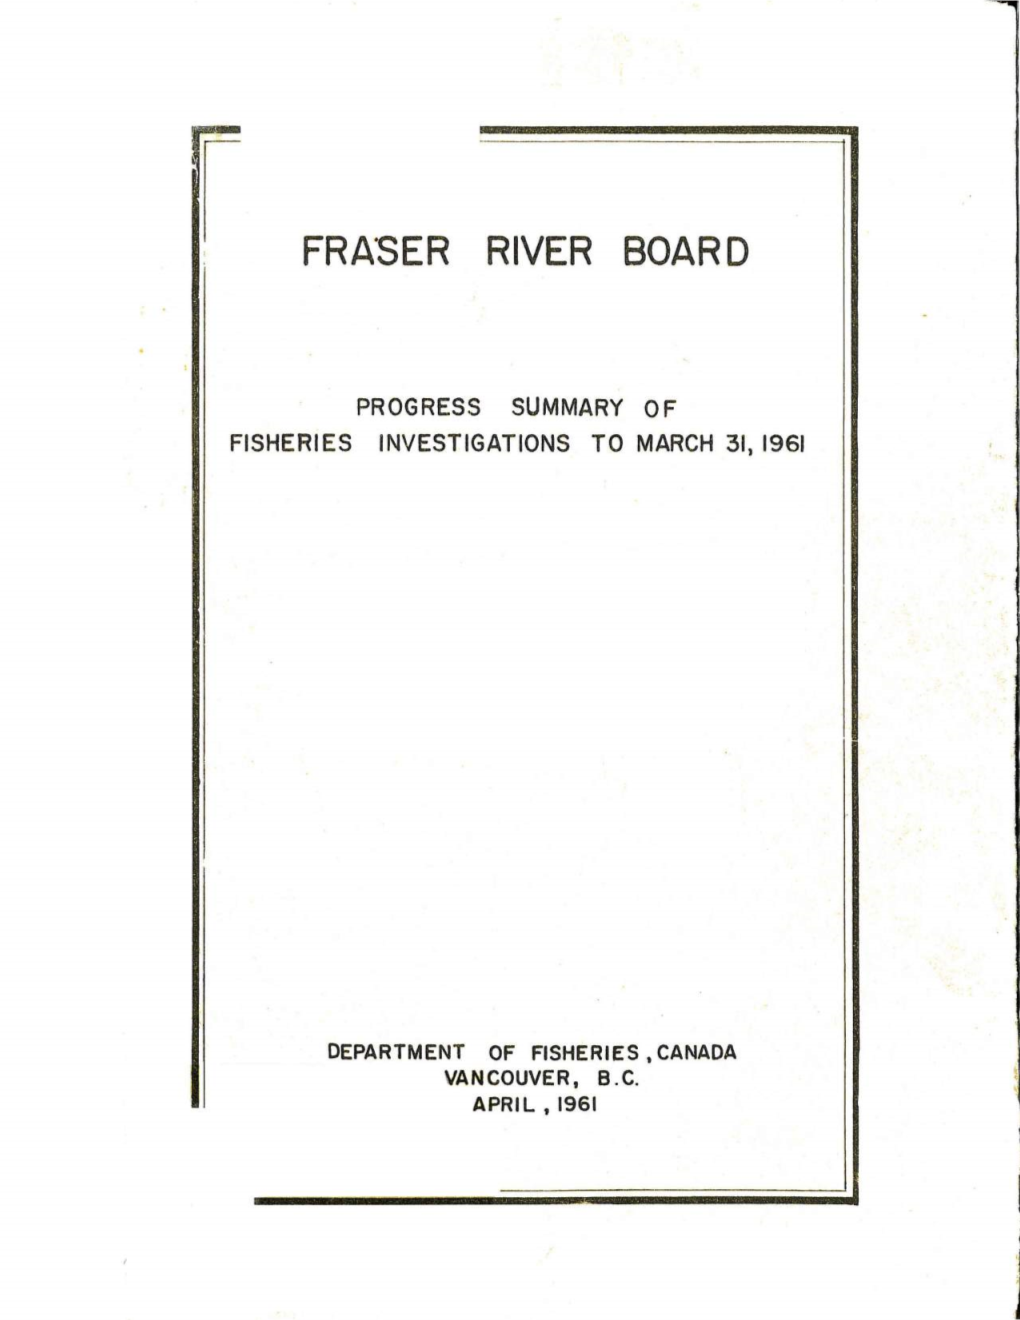 Fra'ser River Board